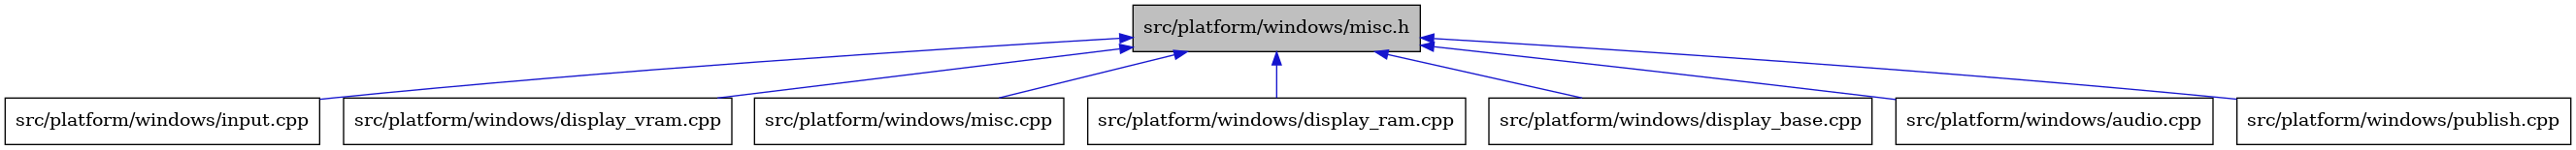 digraph {
    graph [bgcolor="#00000000"]
    node [shape=rectangle style=filled fillcolor="#FFFFFF" font=Helvetica padding=2]
    edge [color="#1414CE"]
    "6" [label="src/platform/windows/input.cpp" tooltip="src/platform/windows/input.cpp"]
    "5" [label="src/platform/windows/display_vram.cpp" tooltip="src/platform/windows/display_vram.cpp"]
    "1" [label="src/platform/windows/misc.h" tooltip="src/platform/windows/misc.h" fillcolor="#BFBFBF"]
    "7" [label="src/platform/windows/misc.cpp" tooltip="src/platform/windows/misc.cpp"]
    "4" [label="src/platform/windows/display_ram.cpp" tooltip="src/platform/windows/display_ram.cpp"]
    "3" [label="src/platform/windows/display_base.cpp" tooltip="src/platform/windows/display_base.cpp"]
    "2" [label="src/platform/windows/audio.cpp" tooltip="src/platform/windows/audio.cpp"]
    "8" [label="src/platform/windows/publish.cpp" tooltip="src/platform/windows/publish.cpp"]
    "1" -> "2" [dir=back tooltip="include"]
    "1" -> "3" [dir=back tooltip="include"]
    "1" -> "4" [dir=back tooltip="include"]
    "1" -> "5" [dir=back tooltip="include"]
    "1" -> "6" [dir=back tooltip="include"]
    "1" -> "7" [dir=back tooltip="include"]
    "1" -> "8" [dir=back tooltip="include"]
}